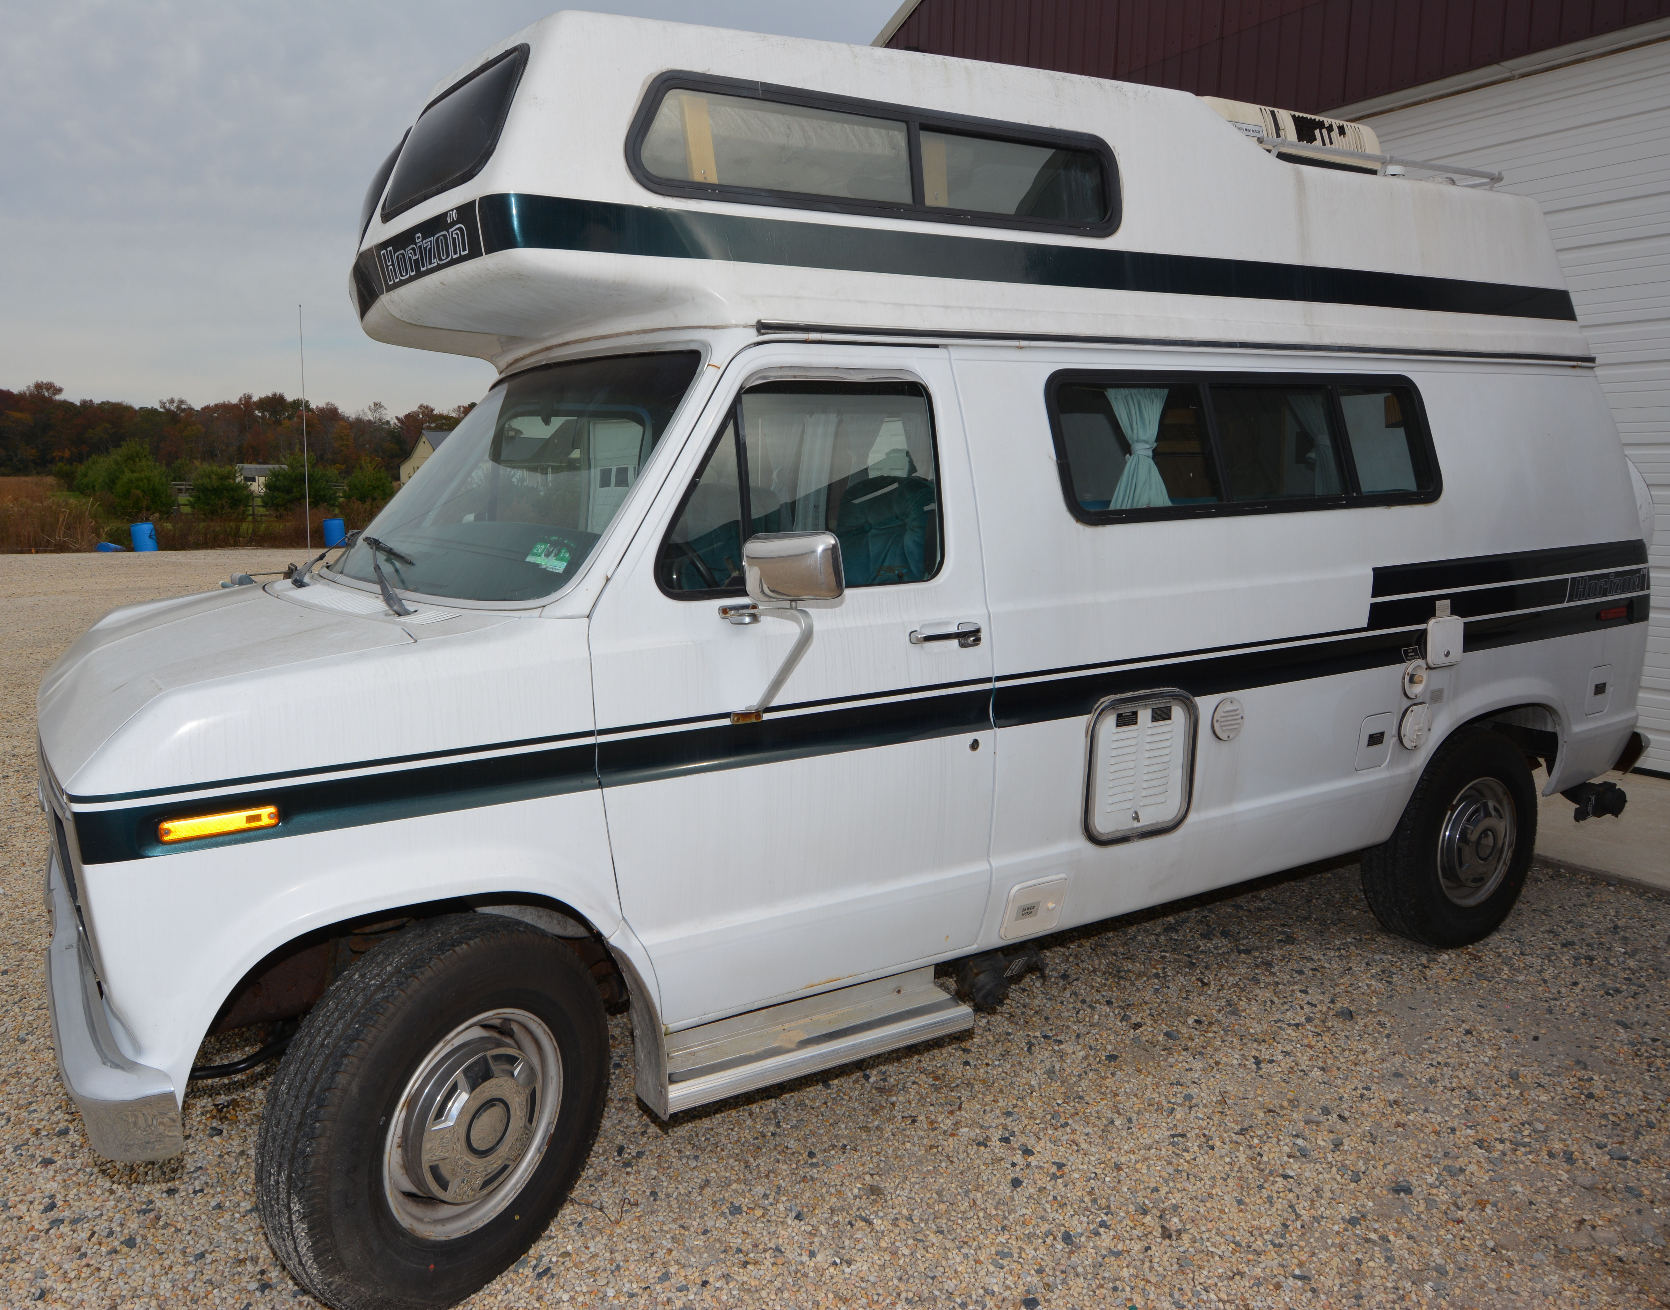 11-21-14 Ford Camper Van-Tabletops-5